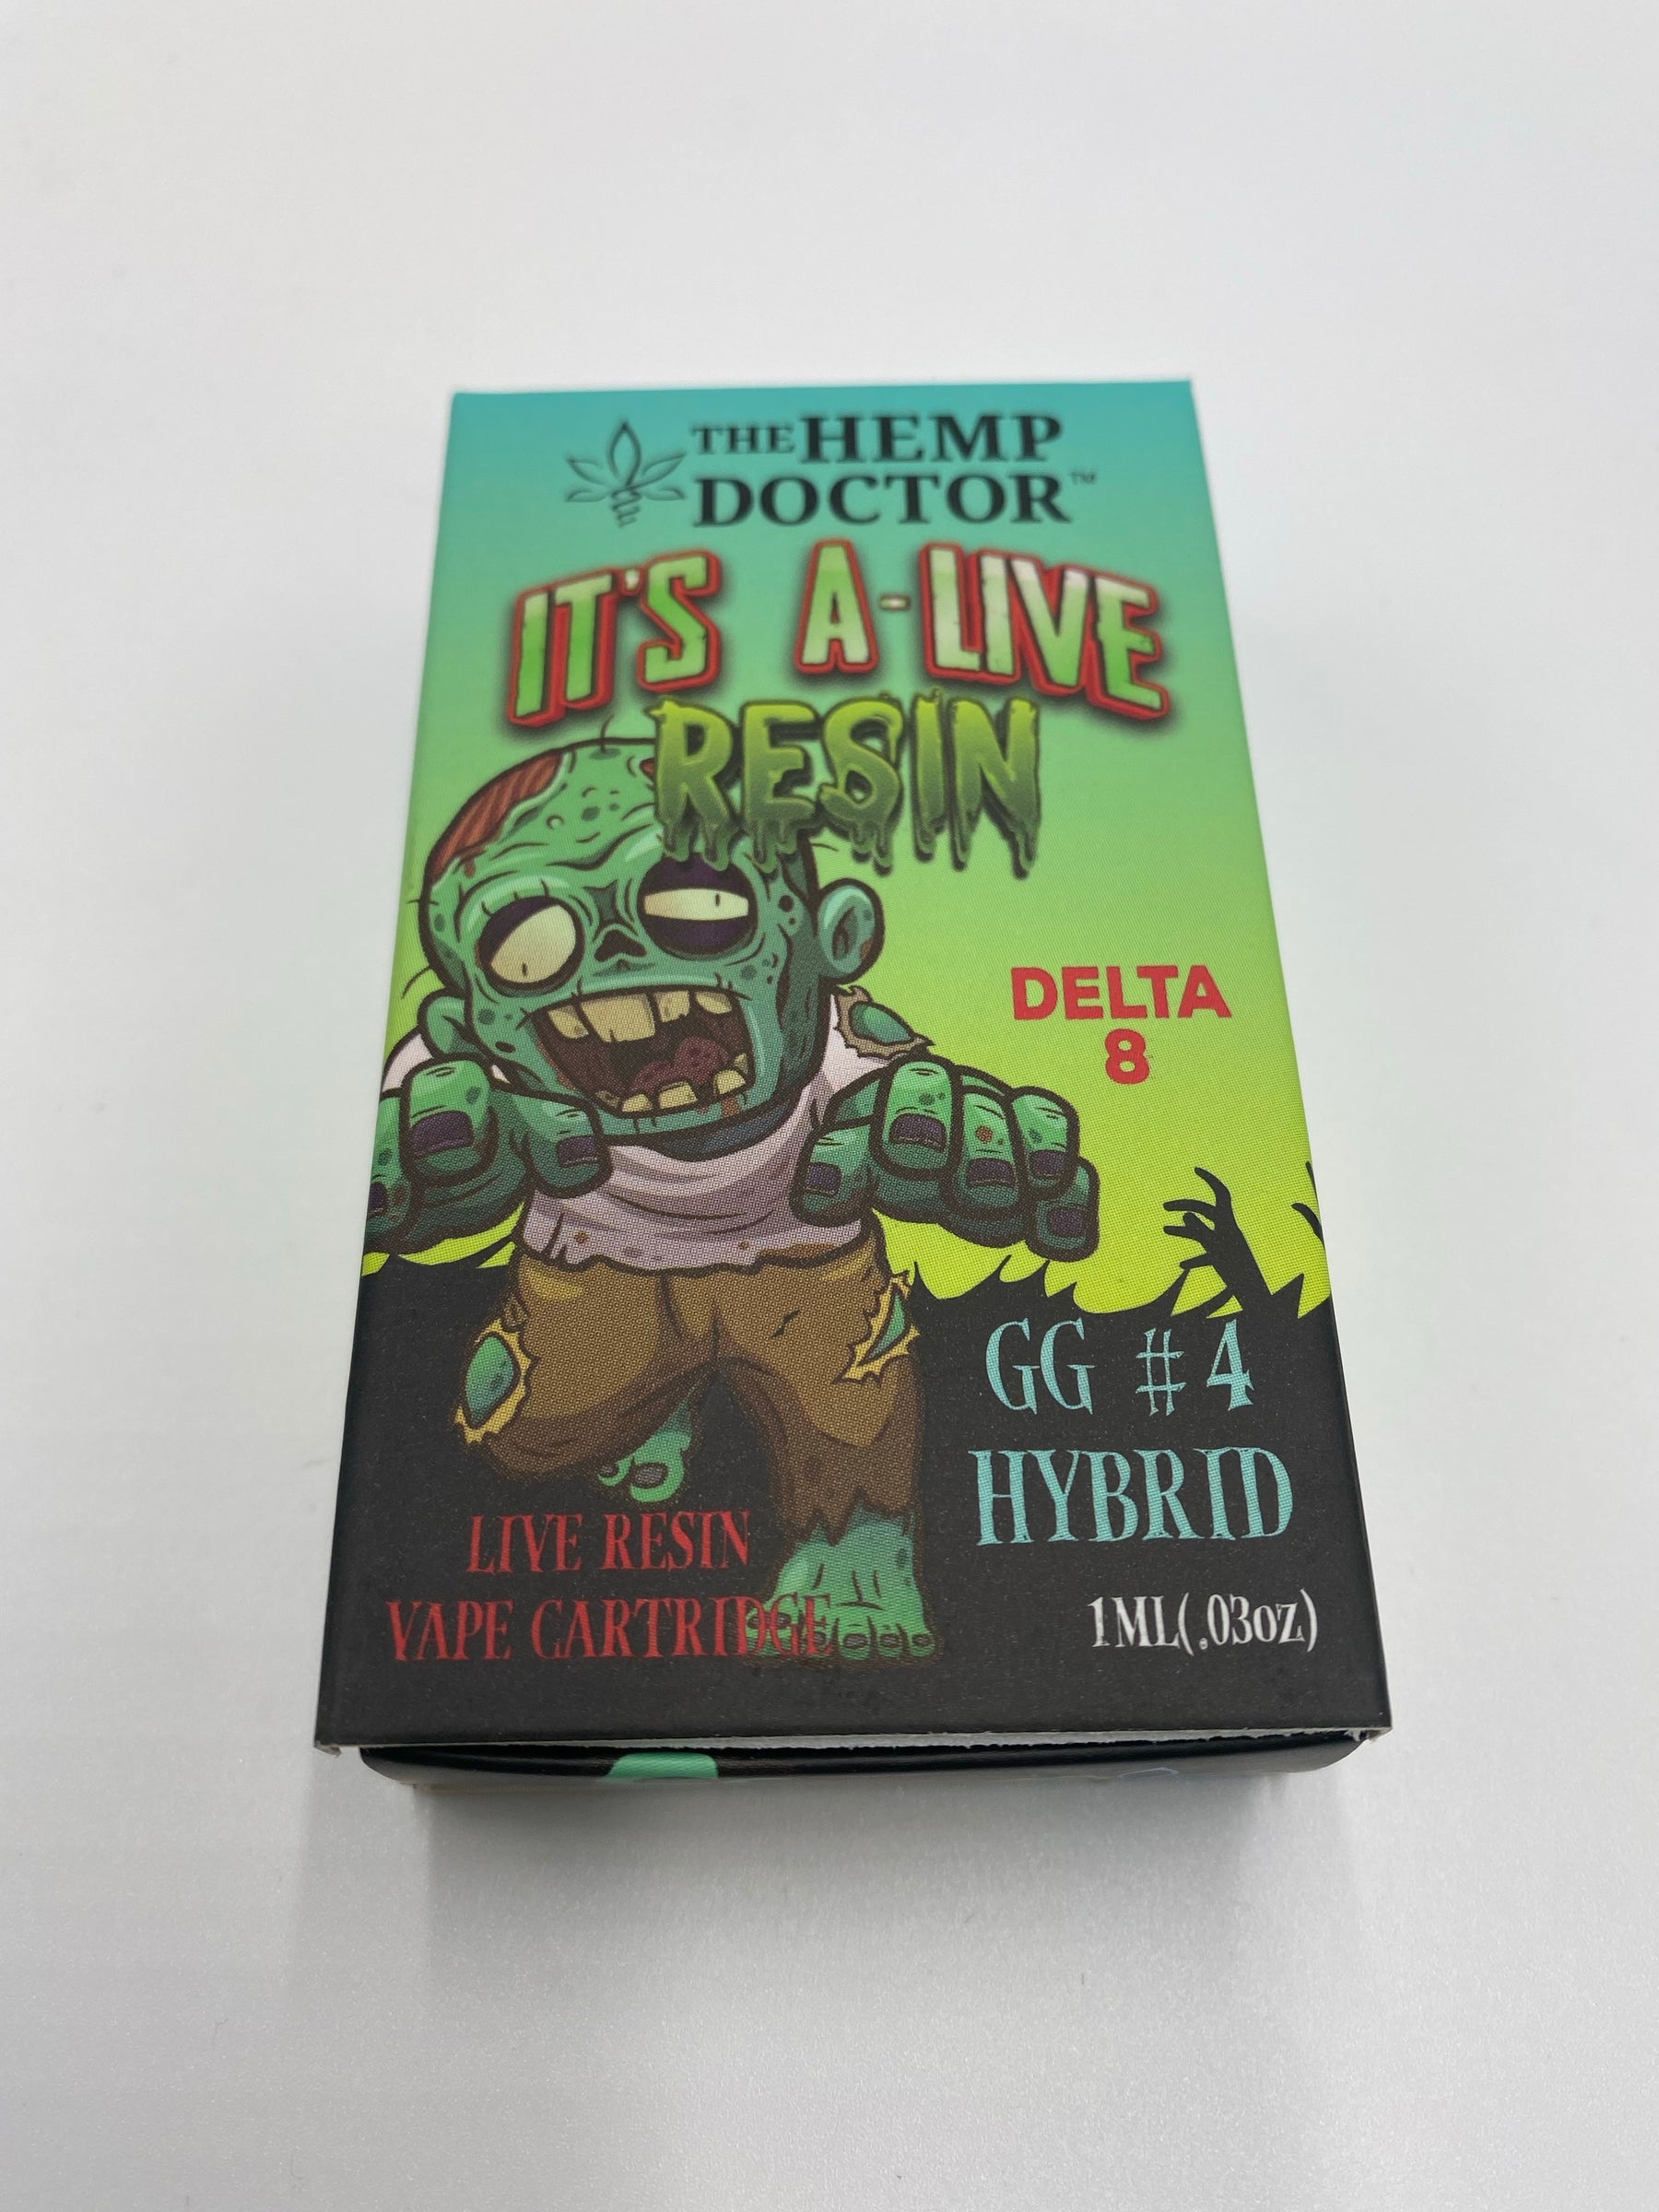 THE HEMP DOCTOR D8 "IT'S A-LIVE RESIN" LIVE RESIN CART GG #4 (HYBRID)